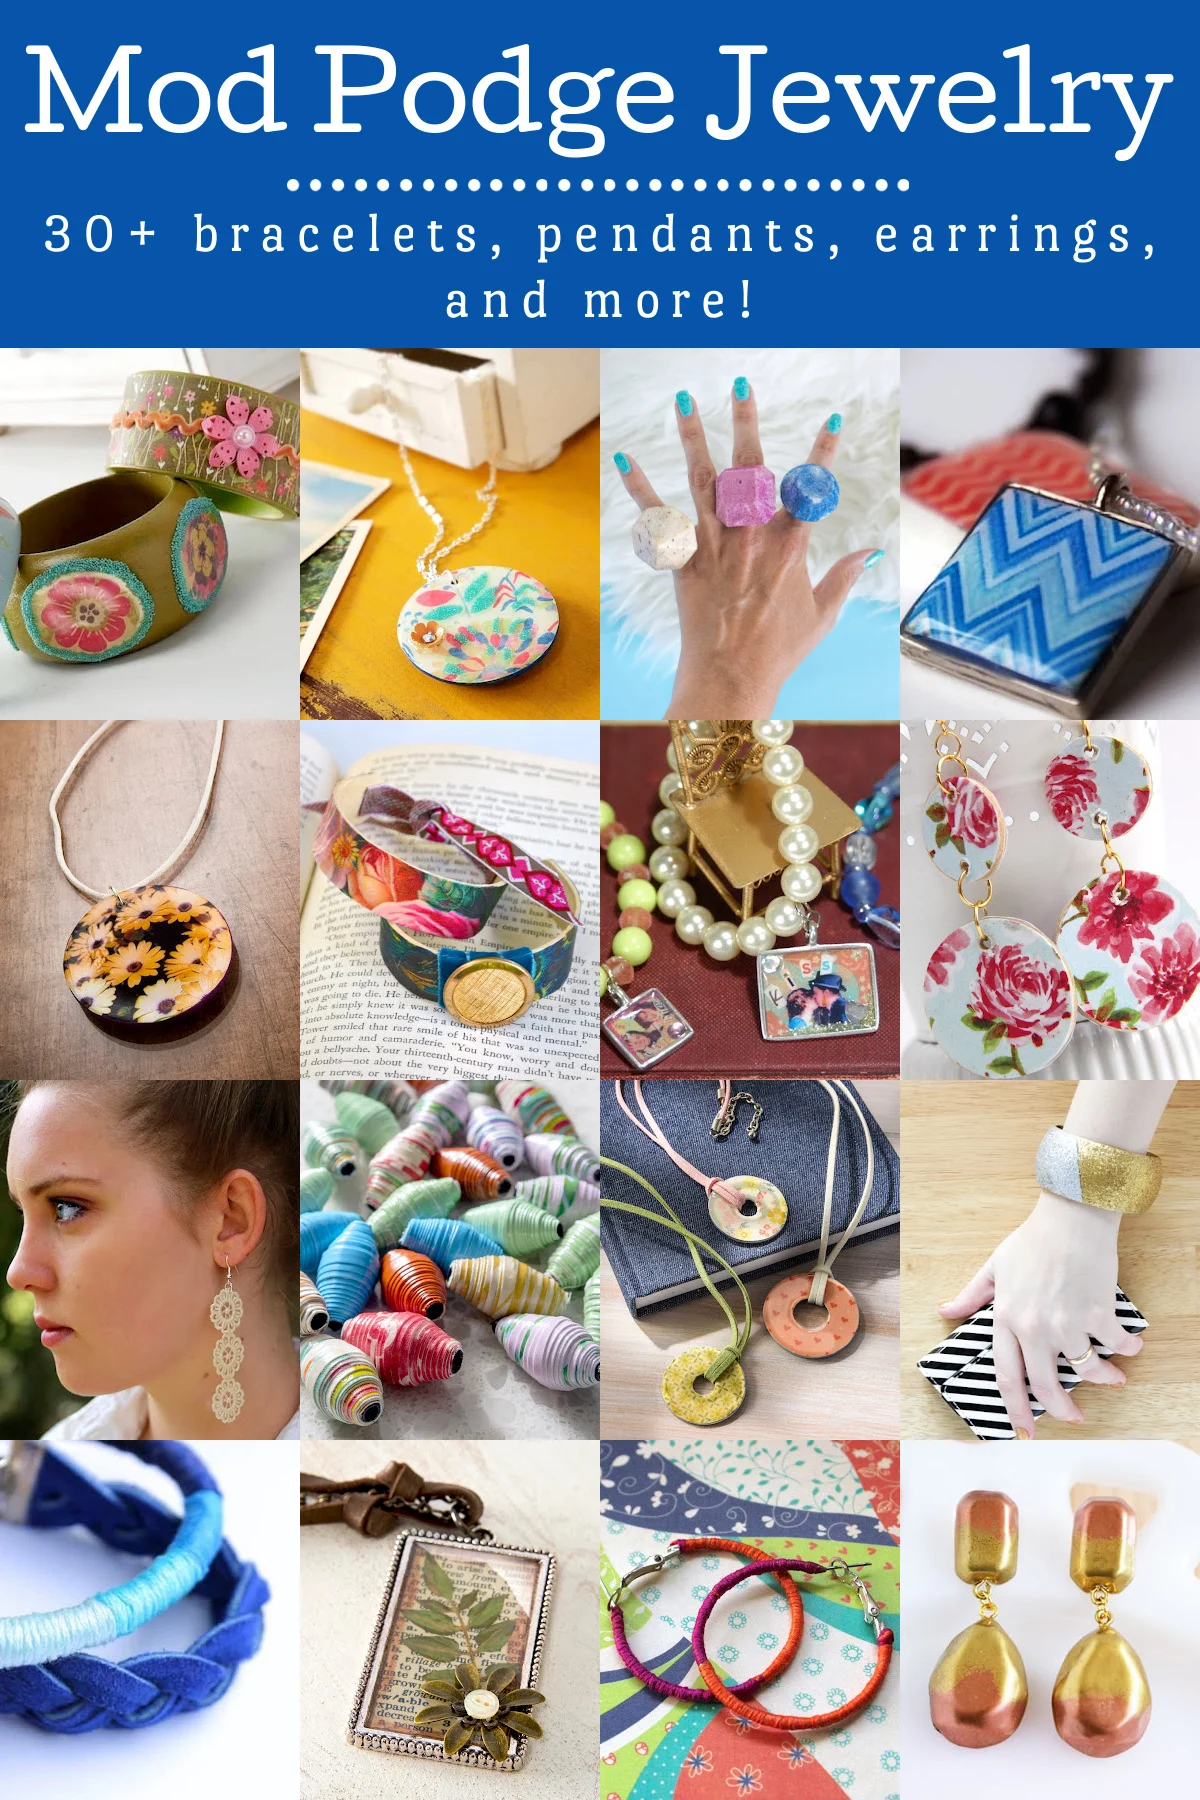 Jewelry Making Kit, Bead Crochet Kit, DIY for Adults, DIY ki